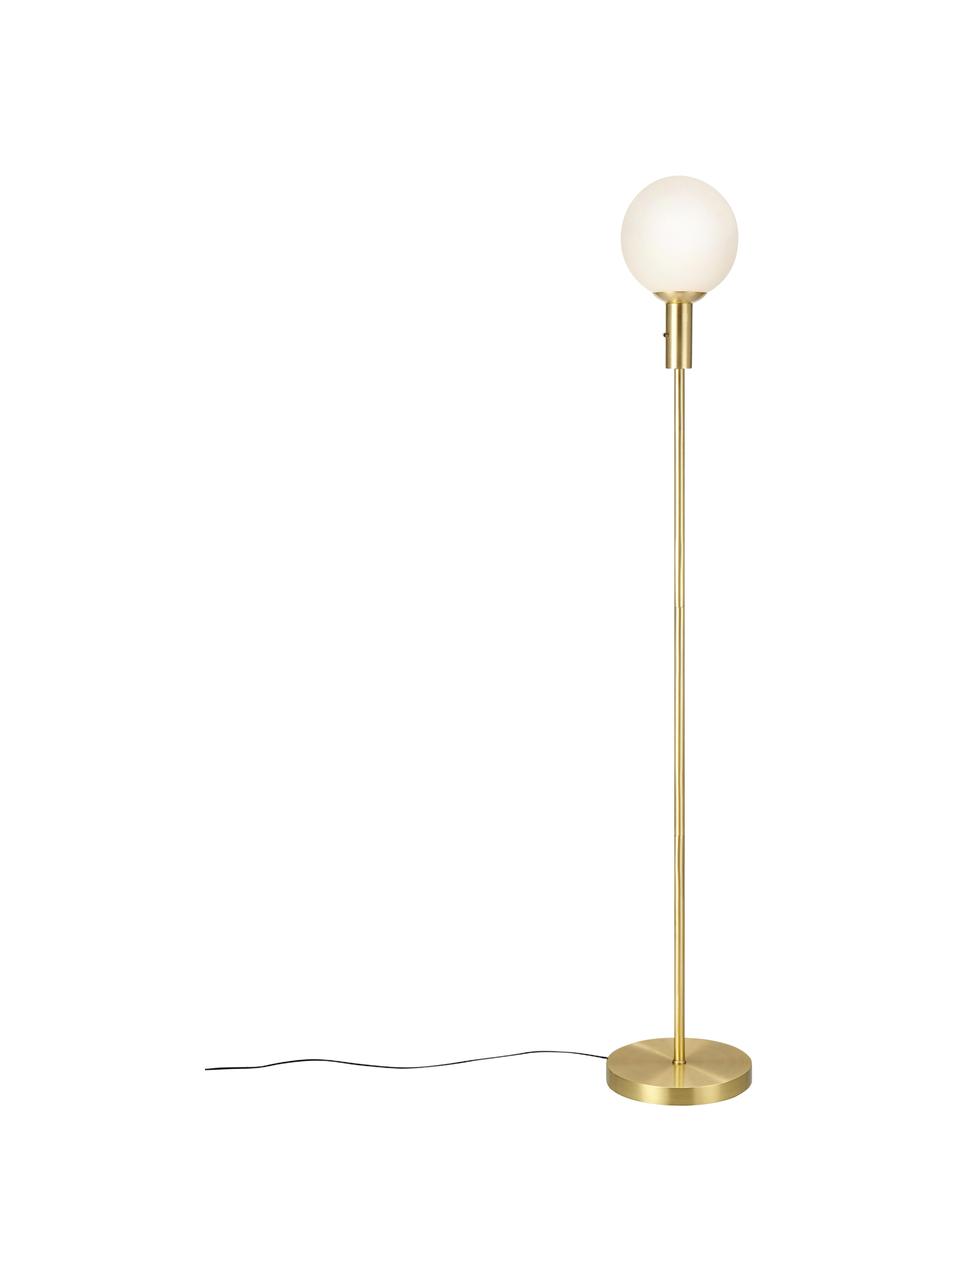 Stehlampe Minna aus Opalglas, Lampenschirm: Opalglas, Lampenfuß: Metall, vermessingt, Messingfarben, Ø 22 x H 144 cm